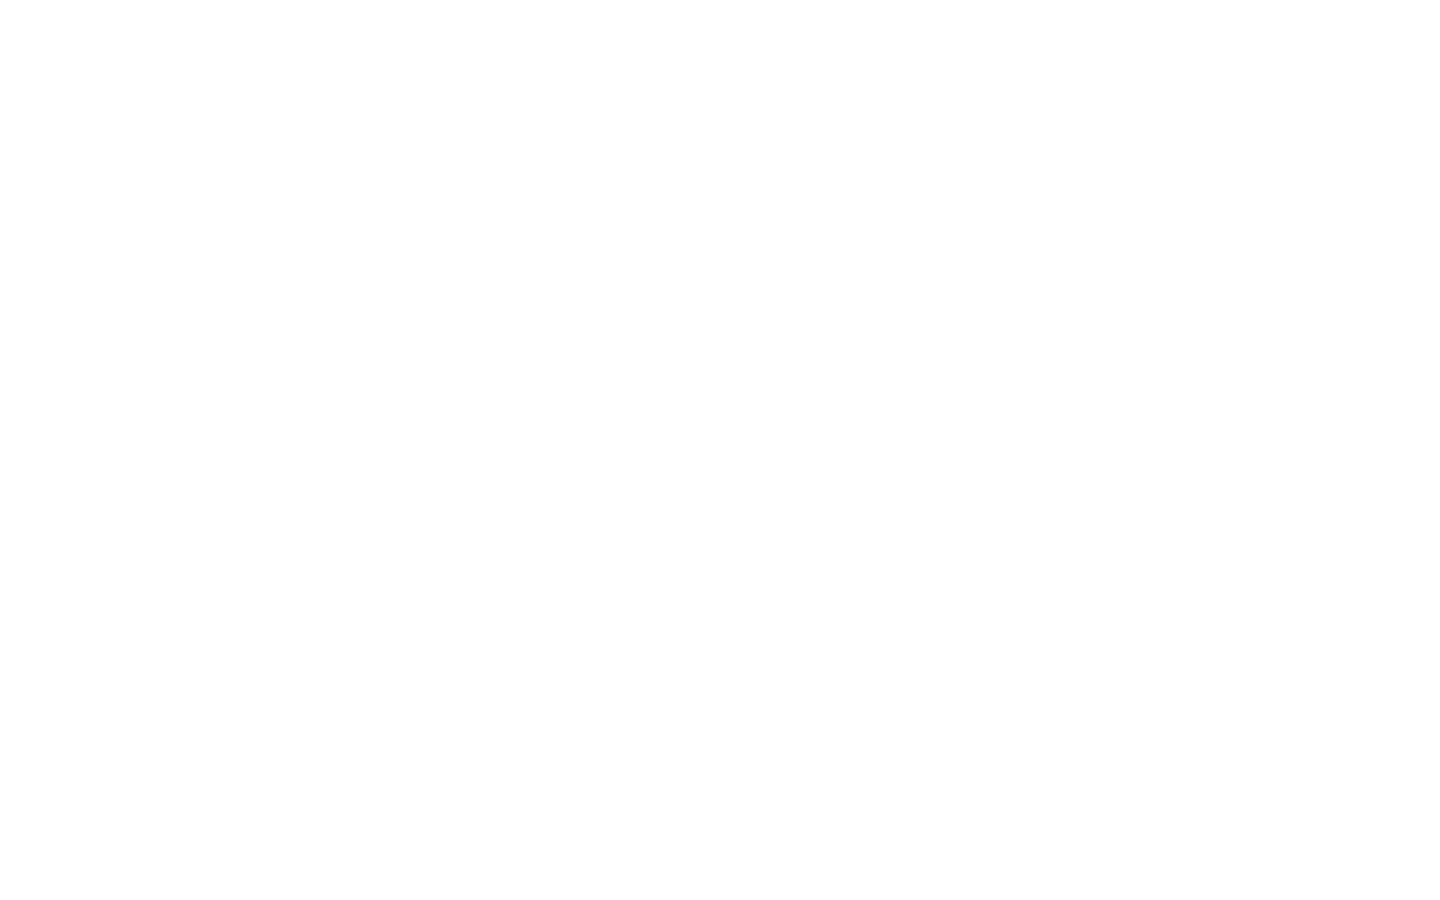 Labvantage logo